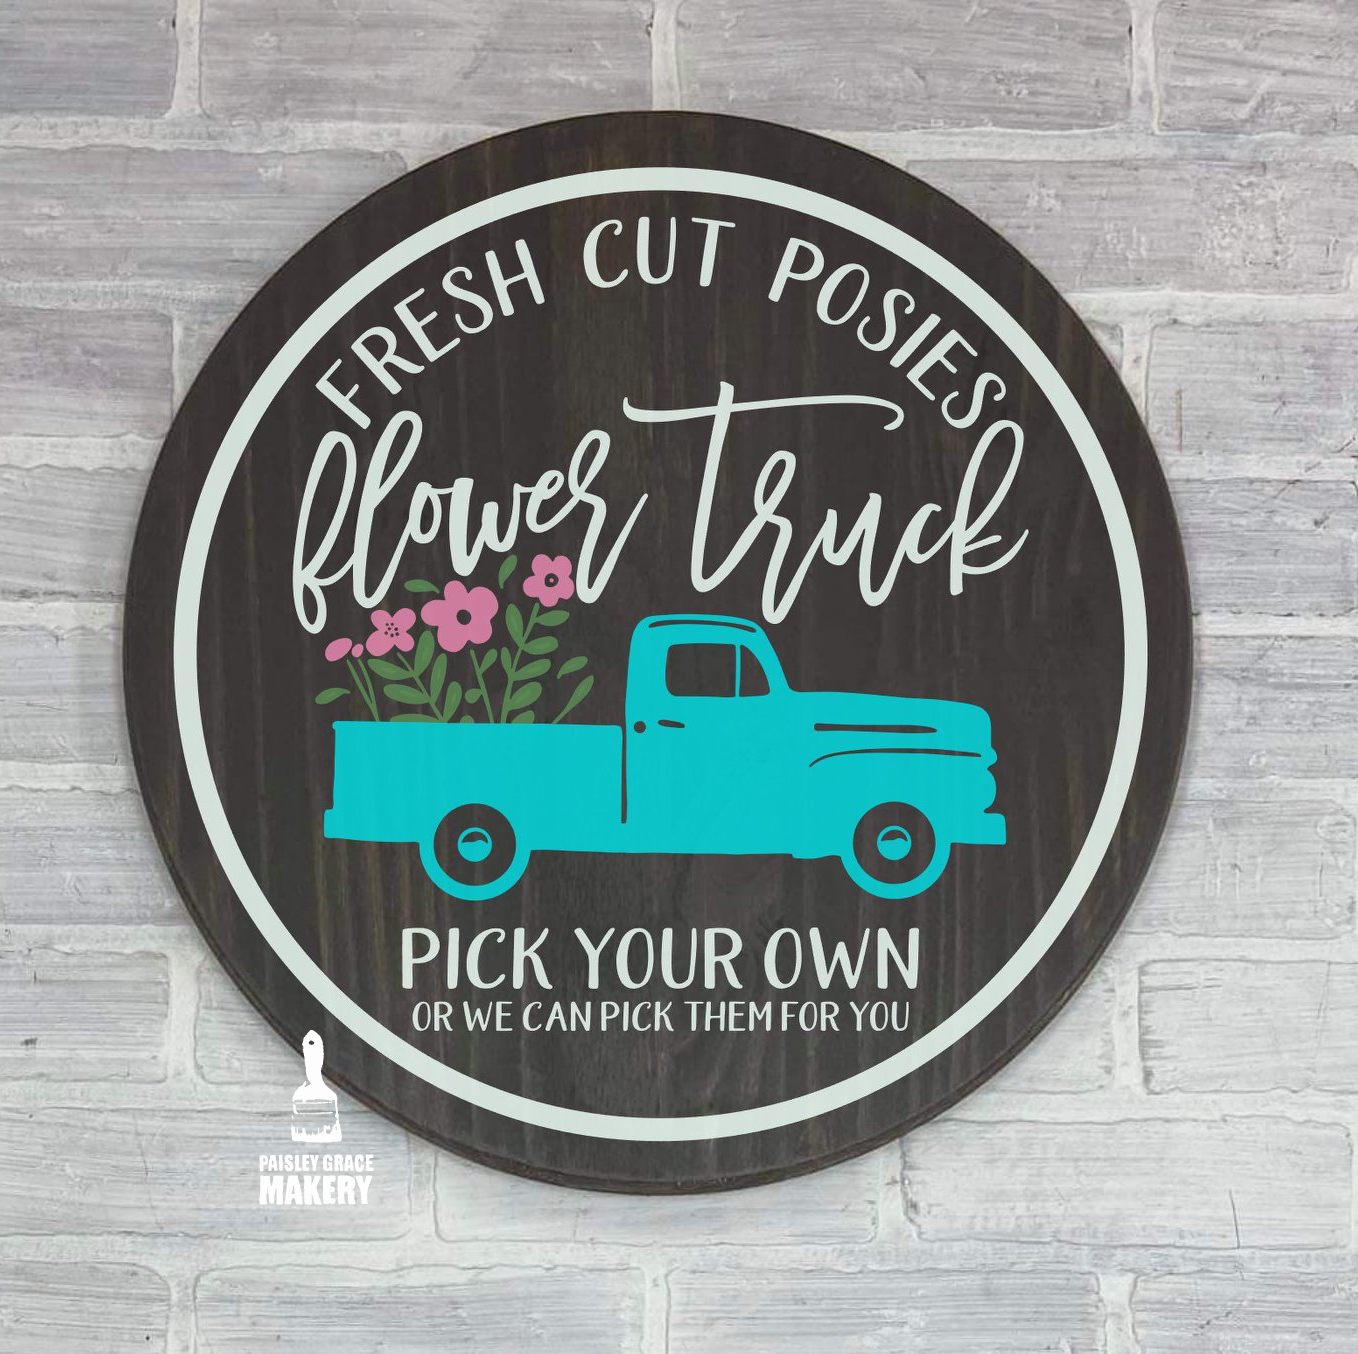 Fresh Cut Posies Truck: ROUND DESIGN - Paisley Grace Makery